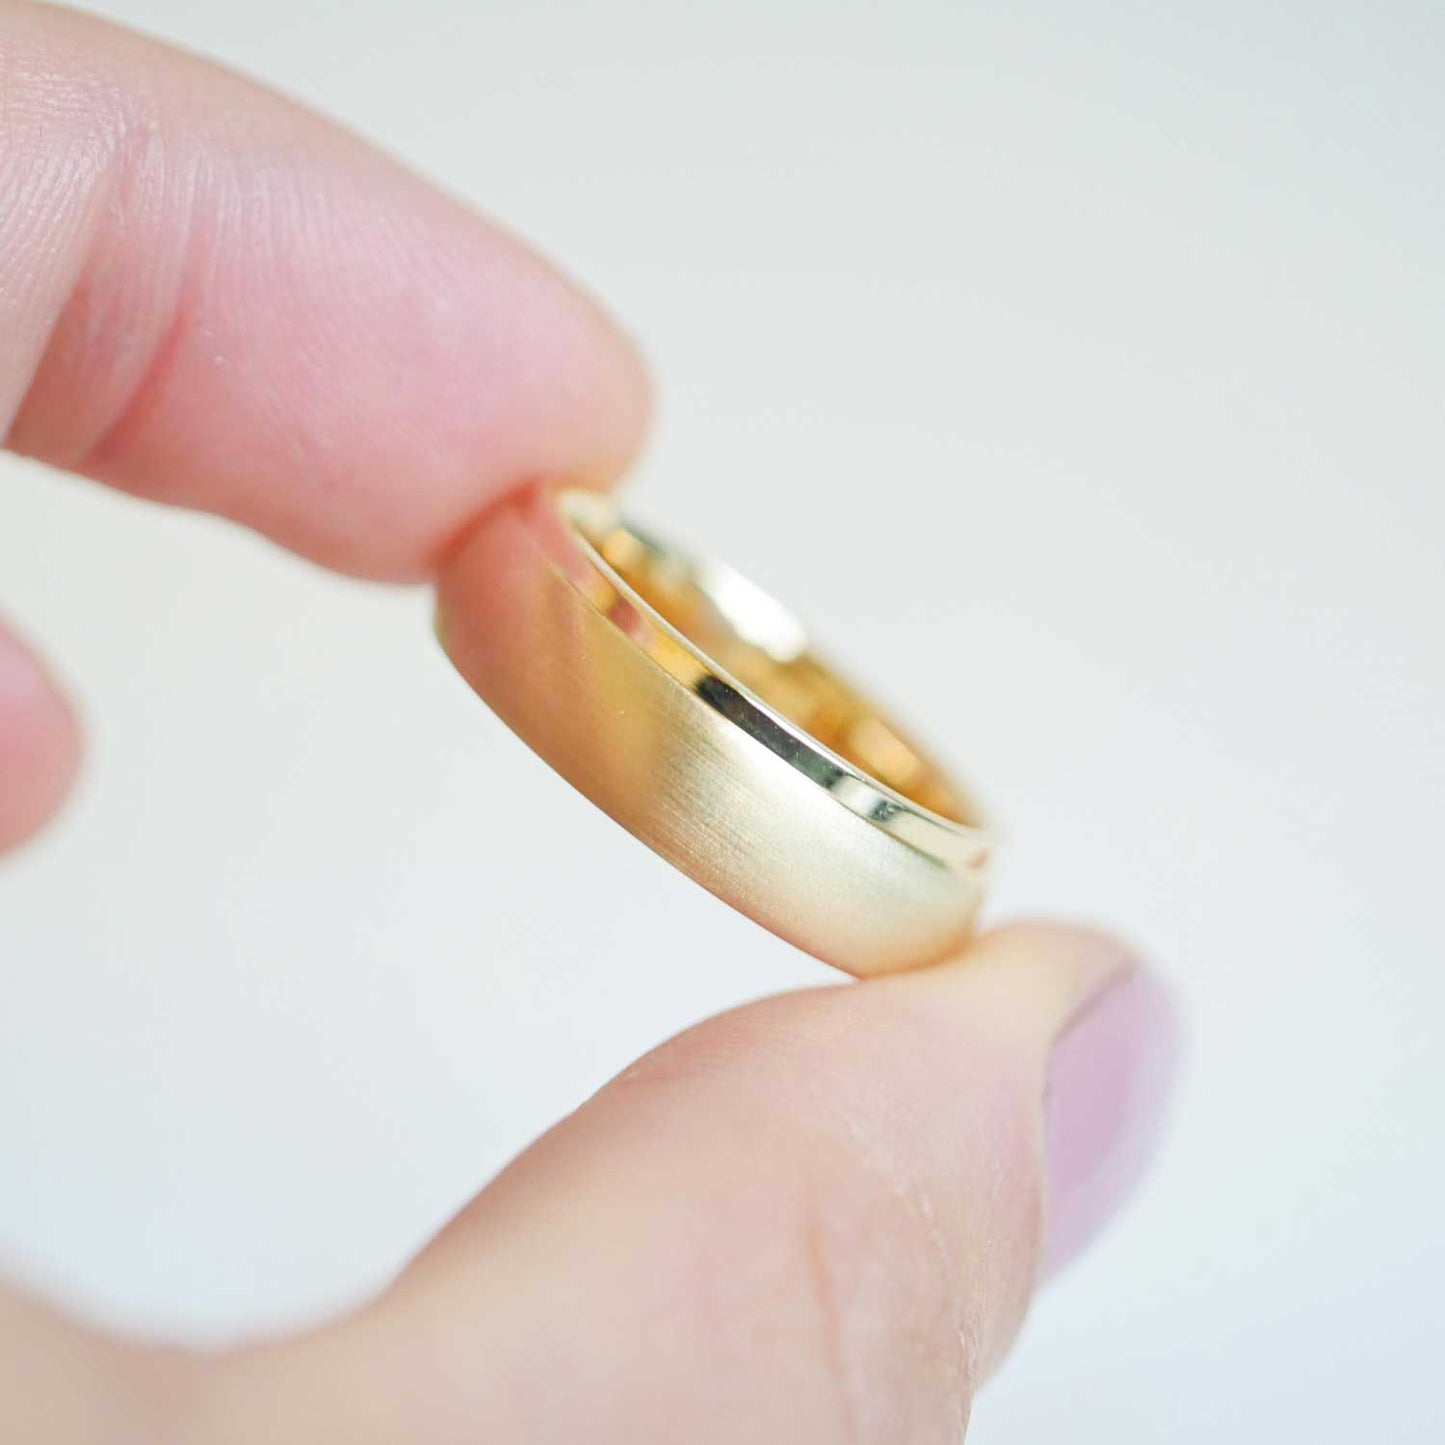 7mm Notched Satin Wedding Ring